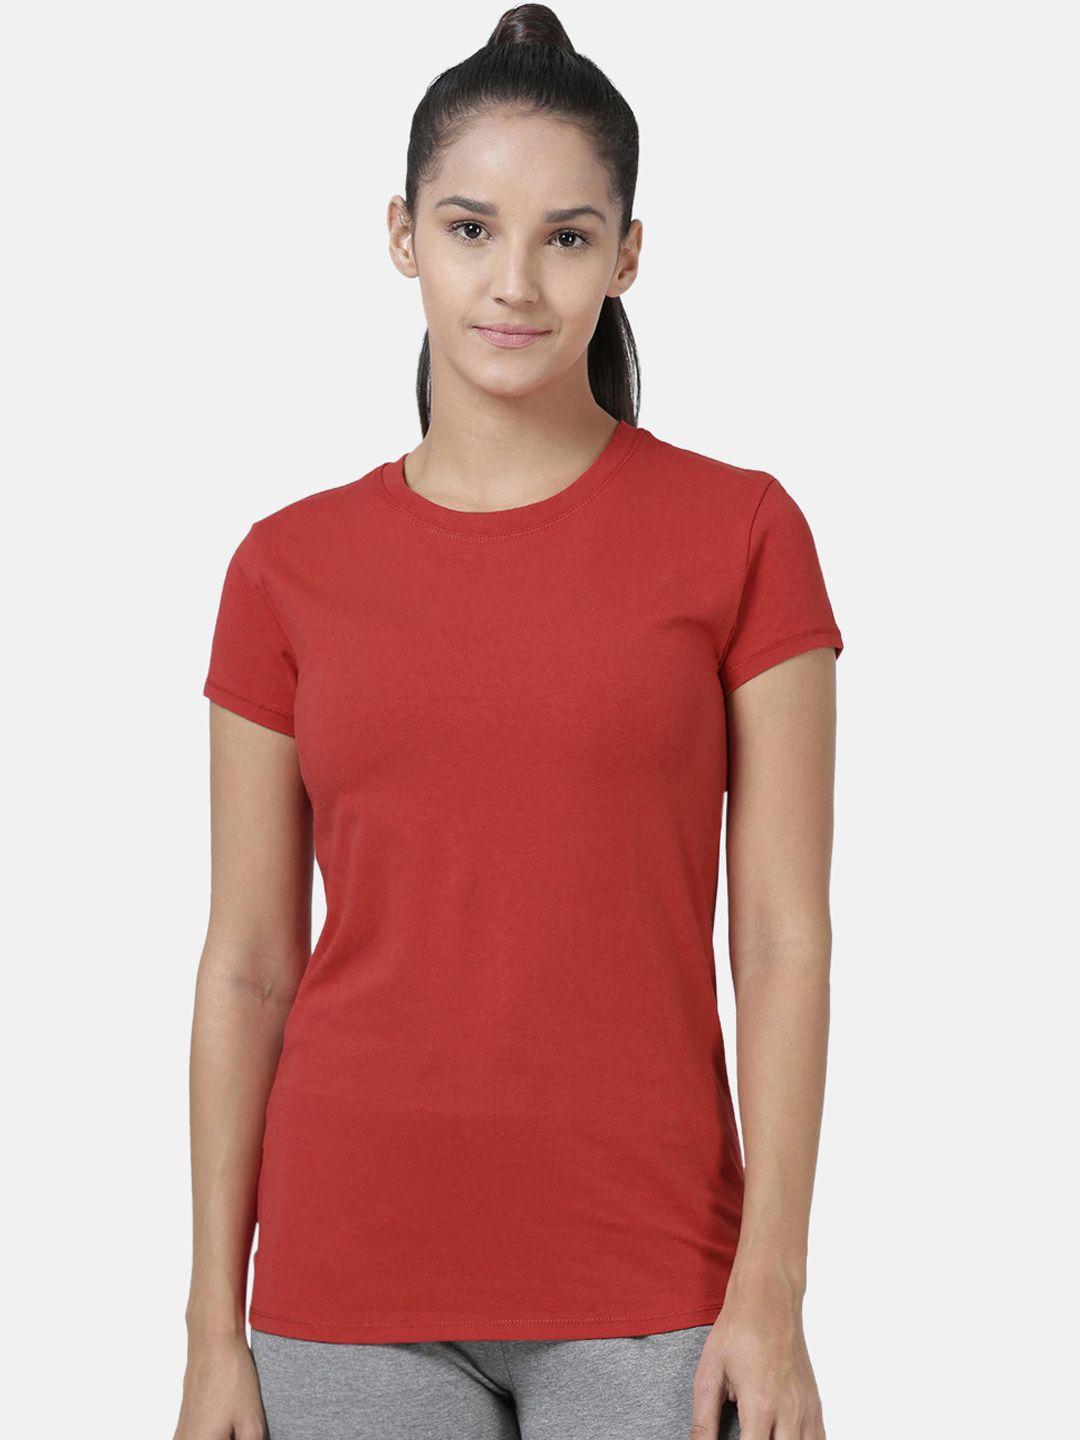 enamor-women-red-slim-fit-crew-round-neck-t-shirt